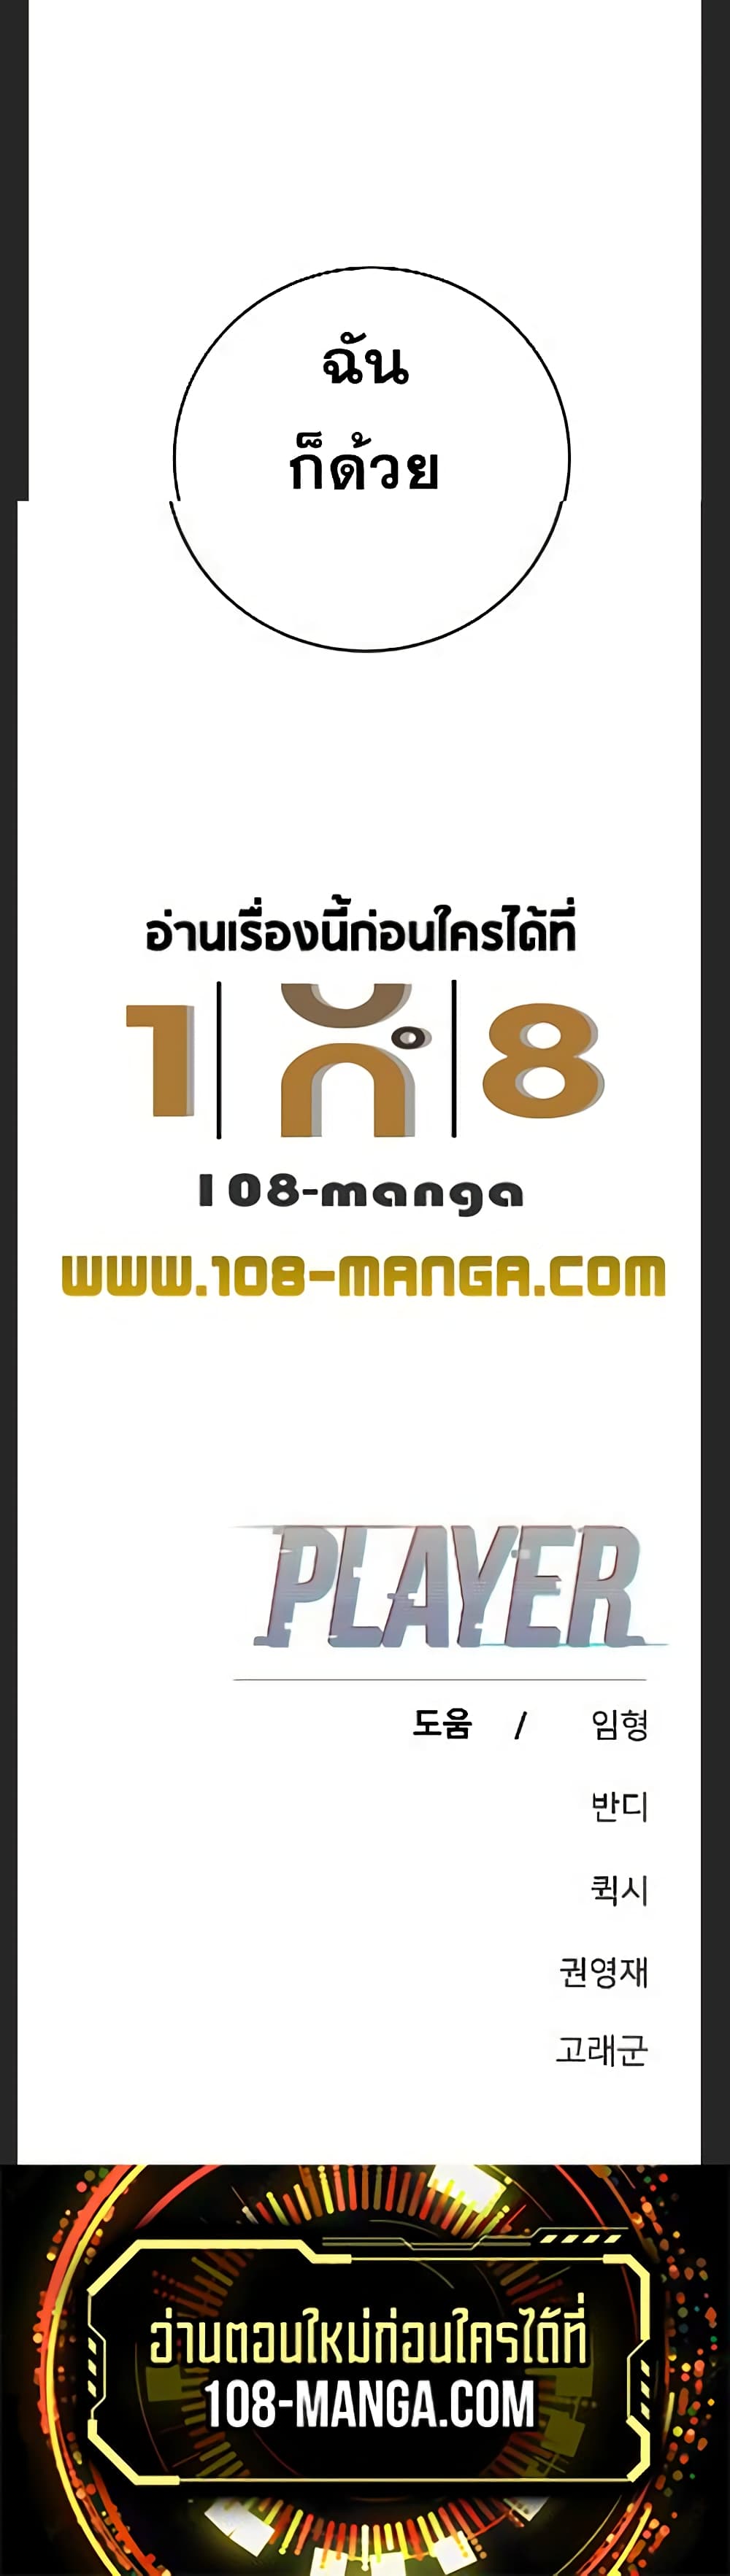 Player 113 50